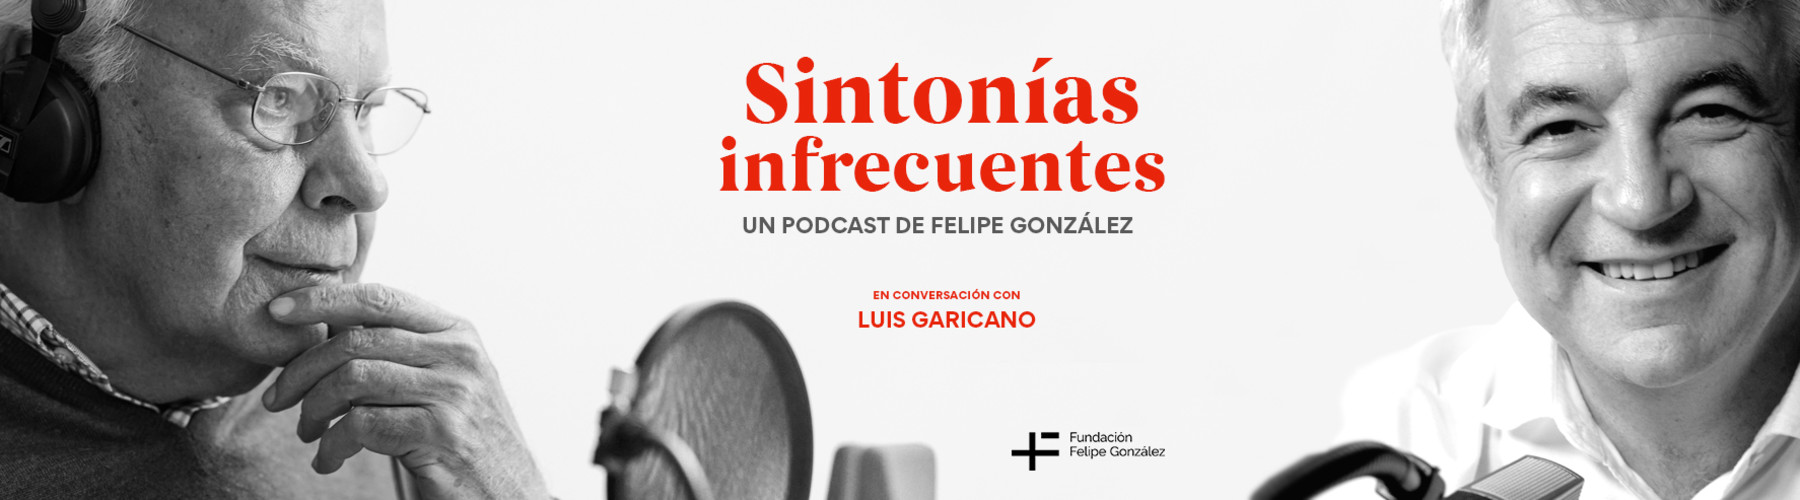 Sintonías infrecuentes: Felipe González conversa con Luis Garicano